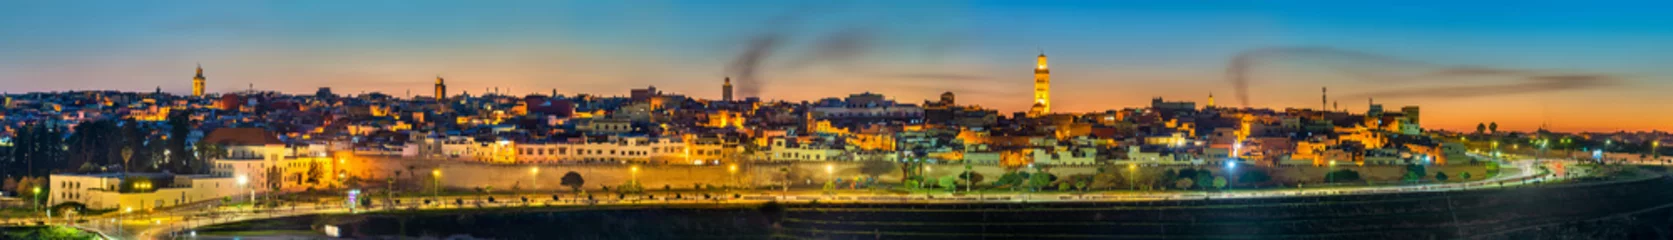 Poster Panorama van Meknes in de avond - Marokko © Leonid Andronov